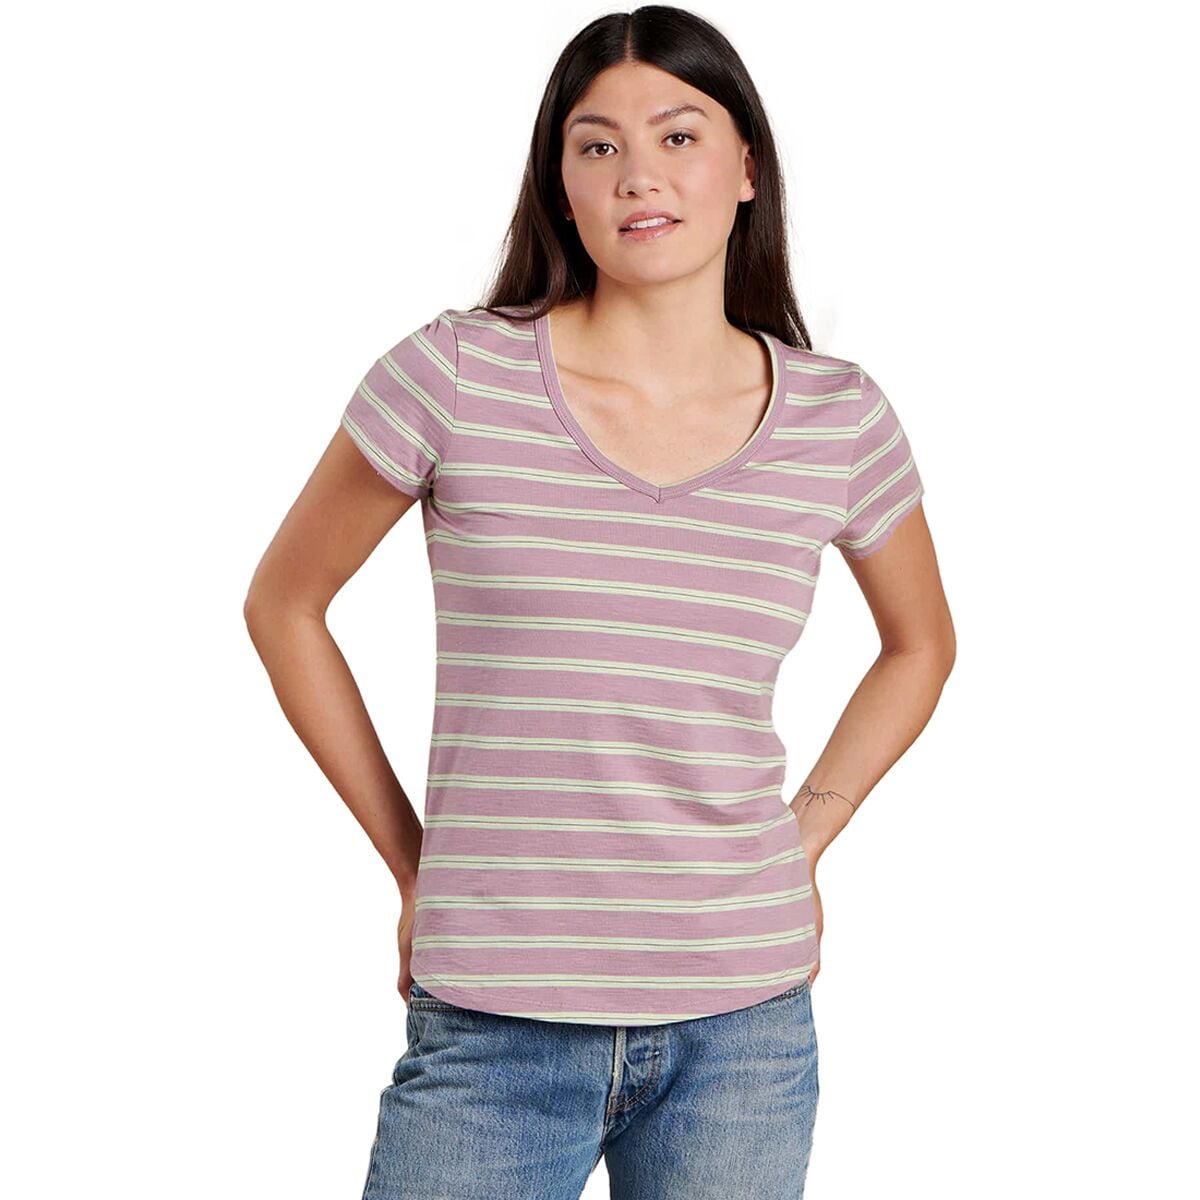 Marley II Short-Sleeve T-Shirt - Women